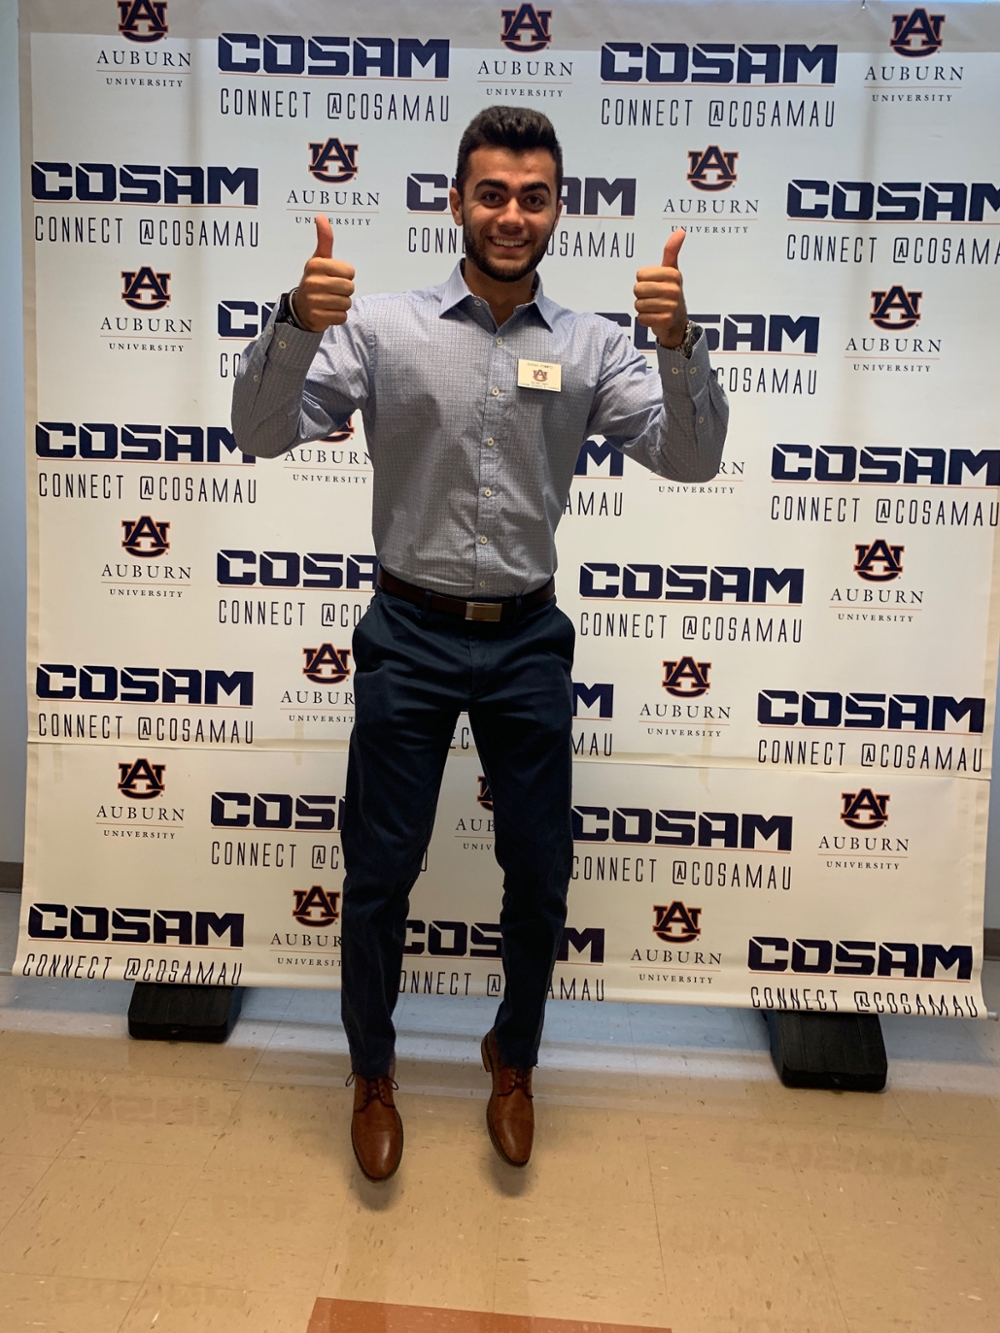 Son of New York Auburn Alumni Pursues COSAM Degree